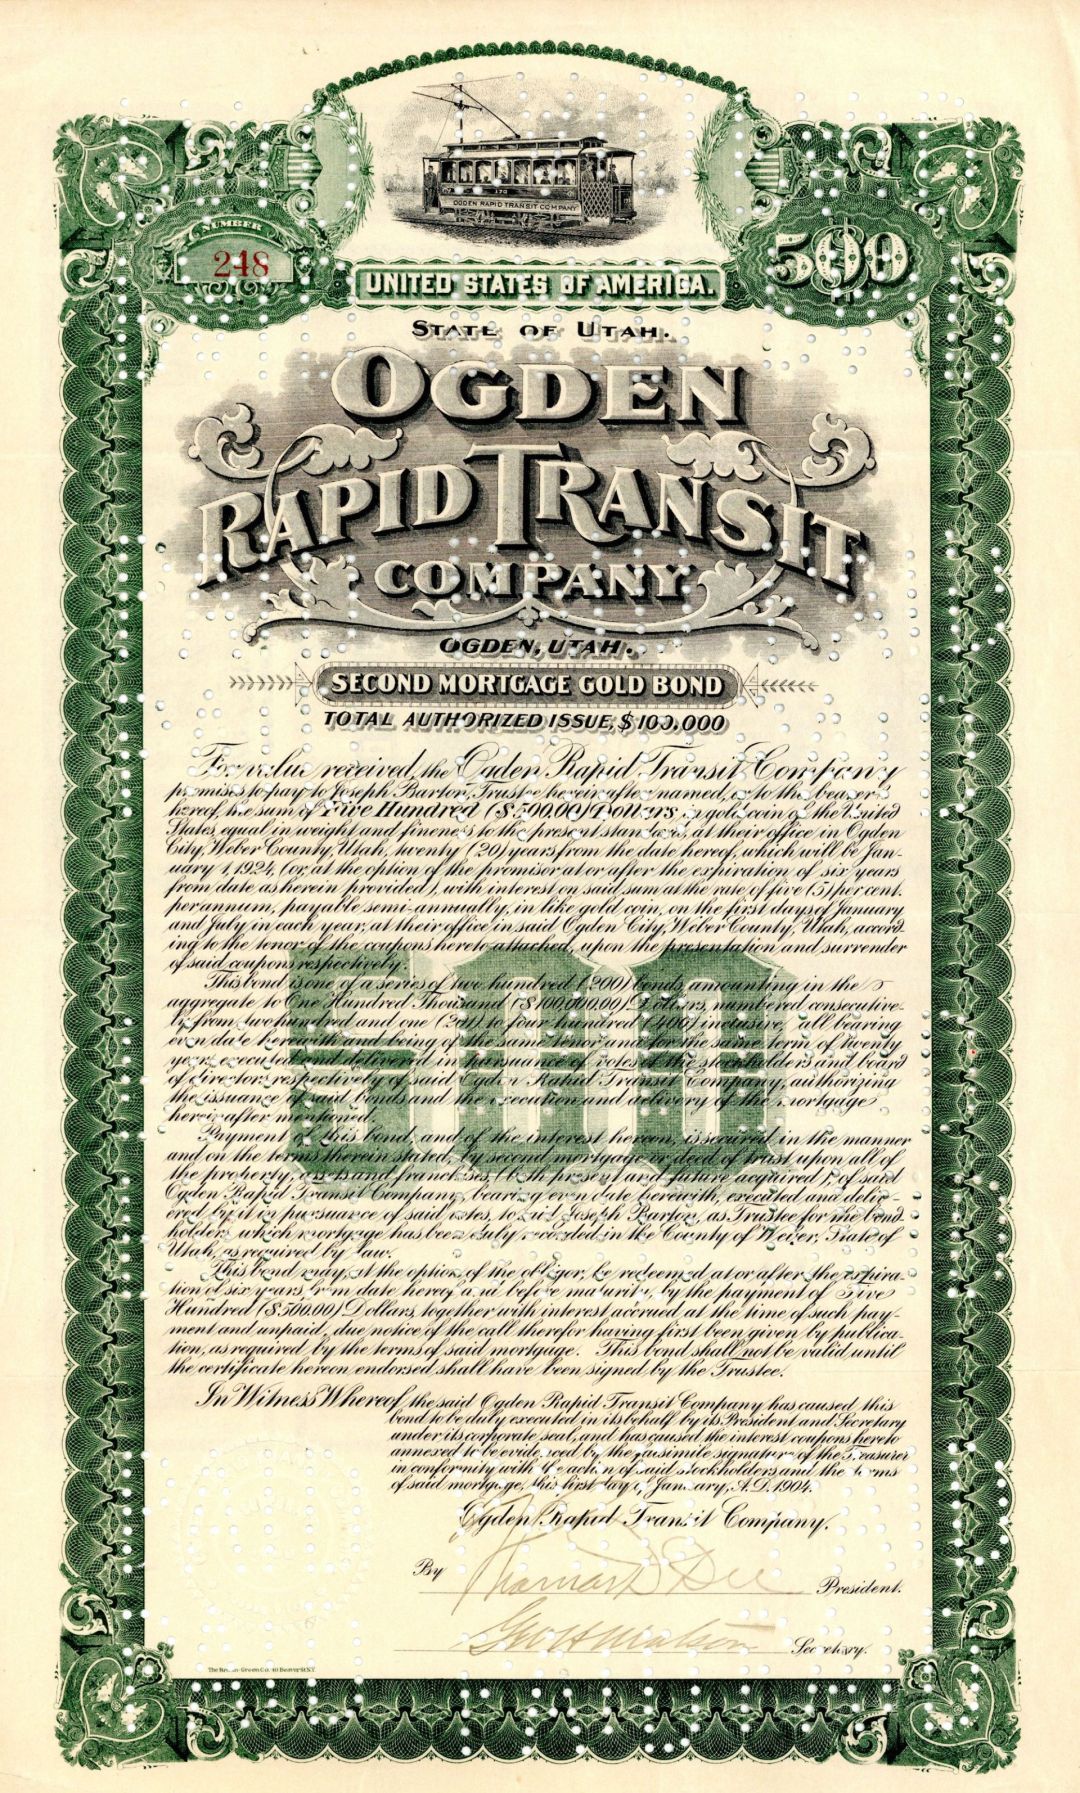 Ogden Rapid Transit Co. - 1904 - $500 Railroad Bond